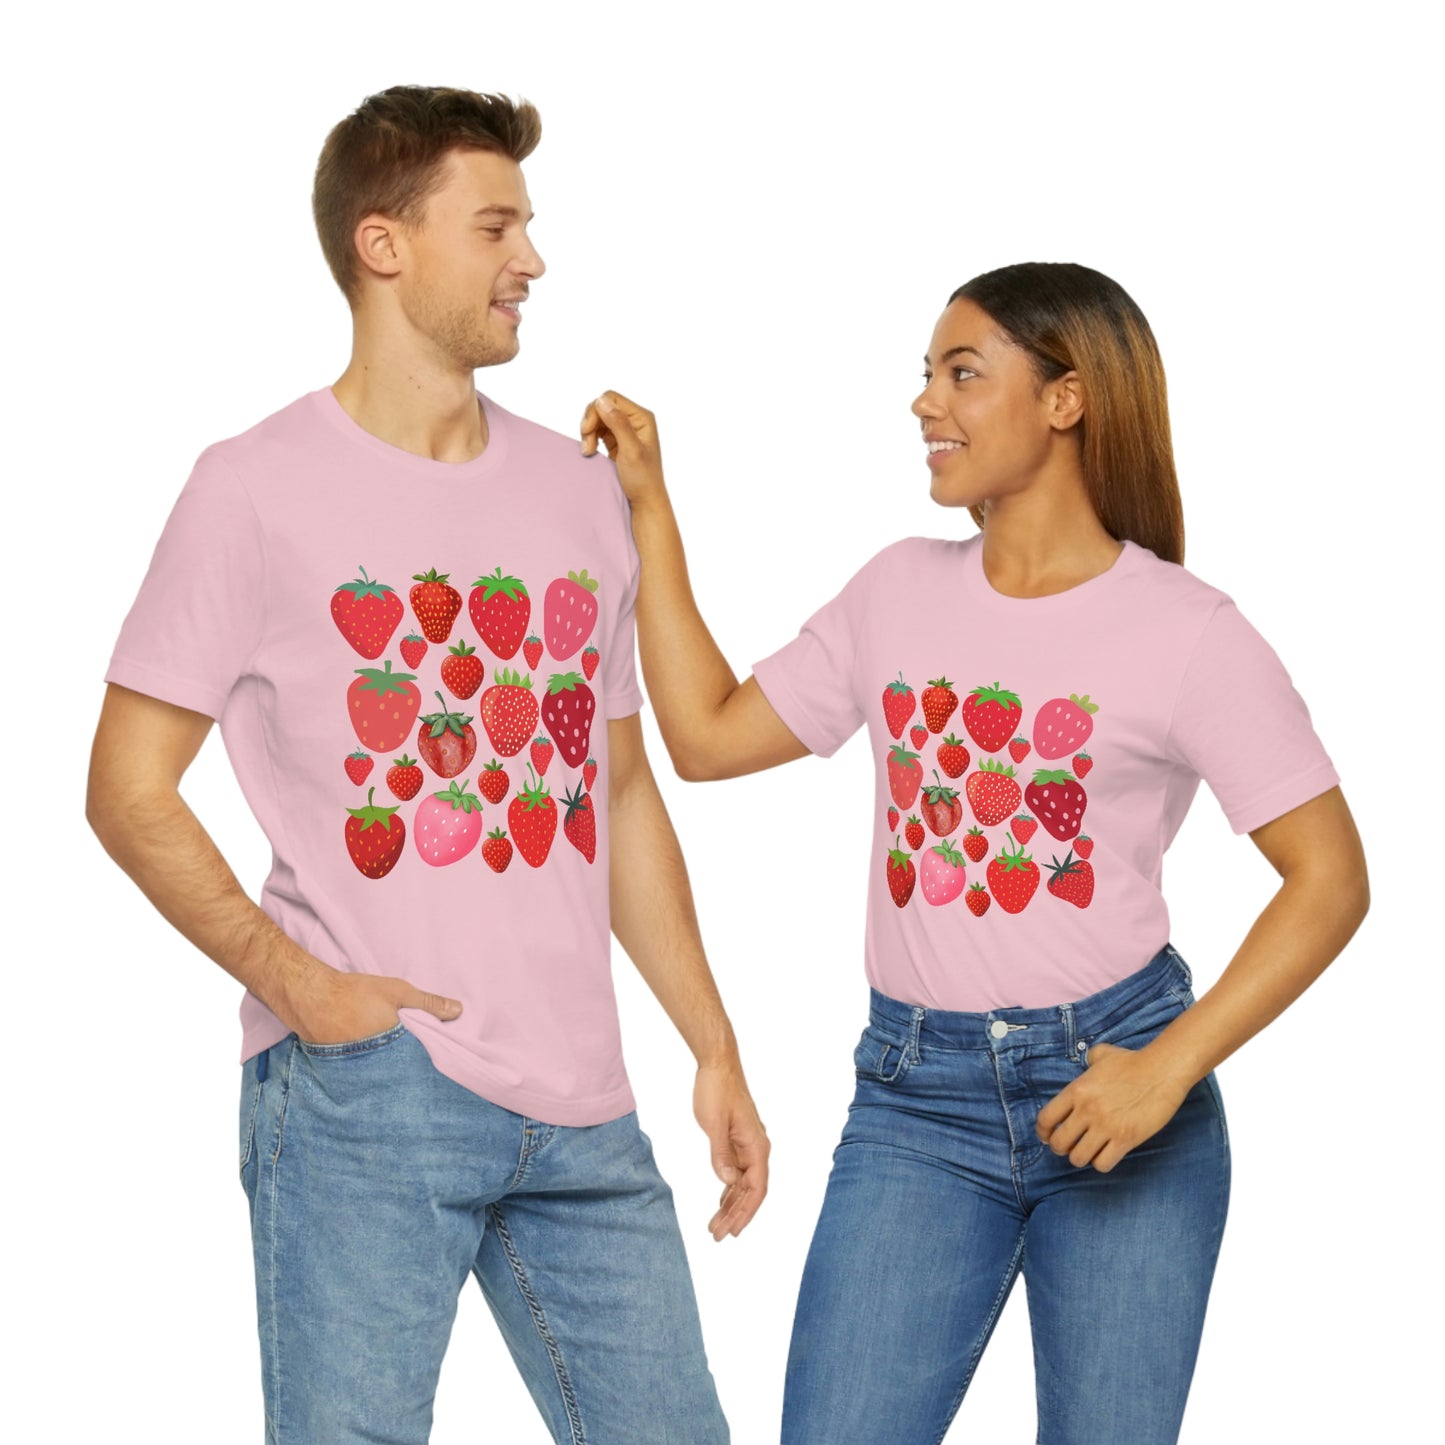 Strawberry Tshirt | Strawberry Shirt | Garden Shirt | Short Sleeved T-Shirt